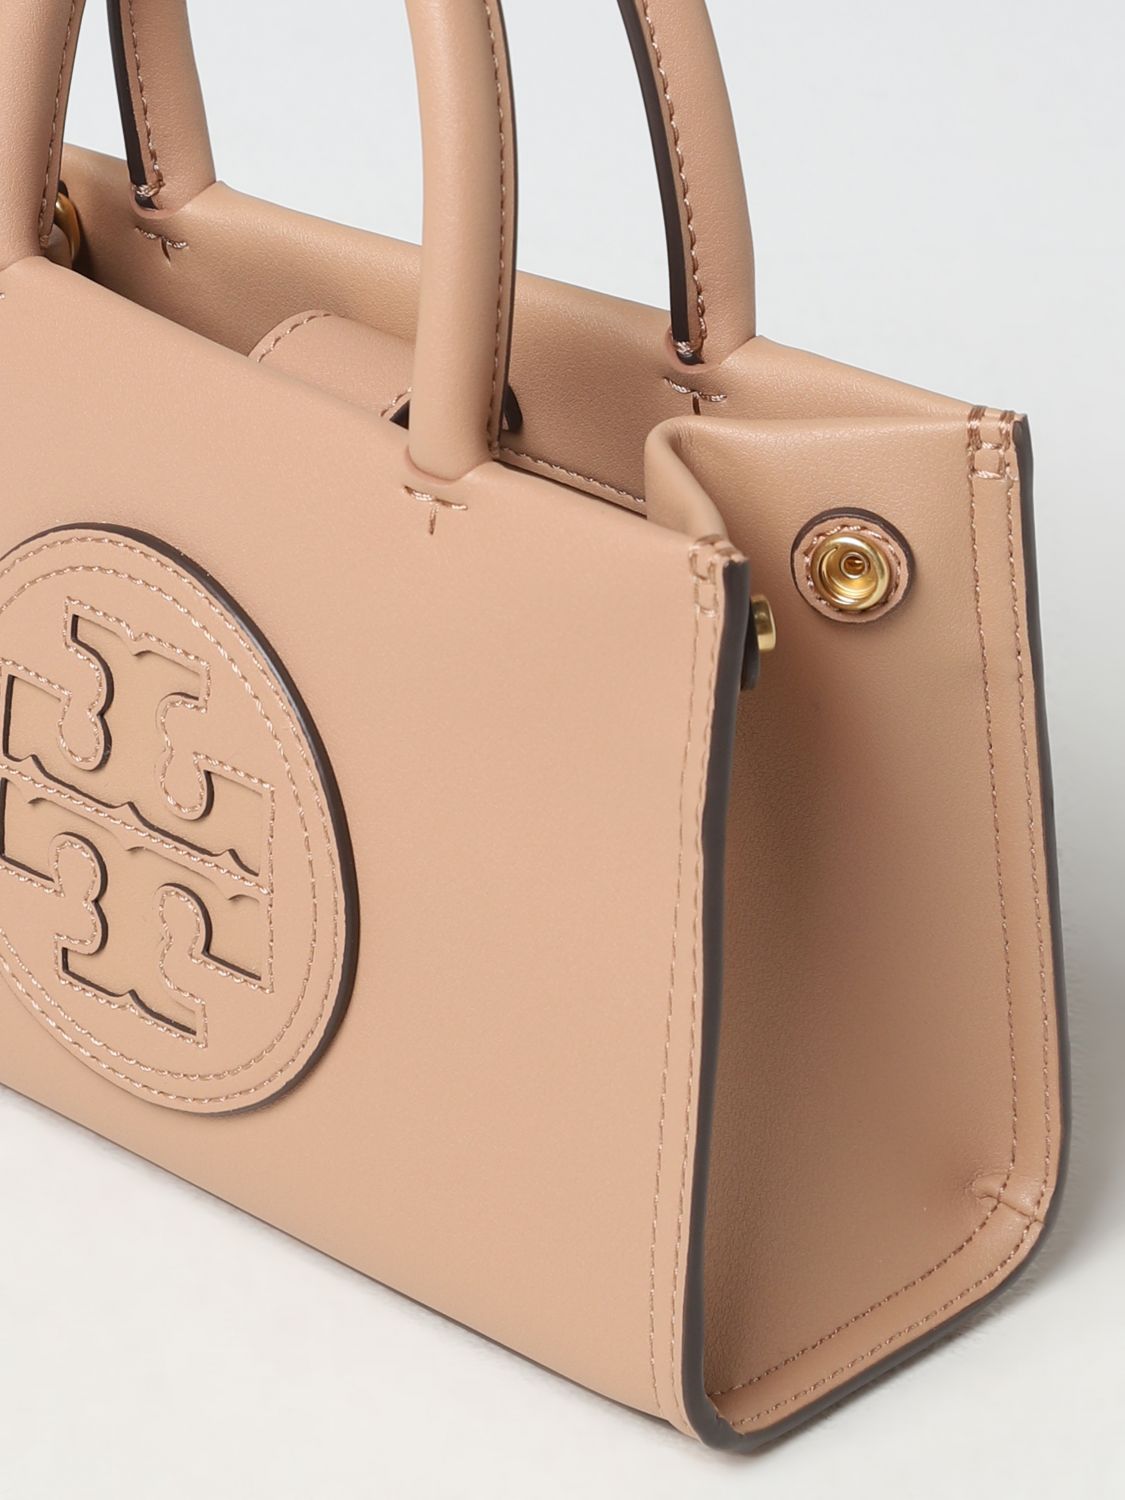 TORY mini bag for woman - Sand | Tory Burch mini bag 145613 online on GIGLIO.COM